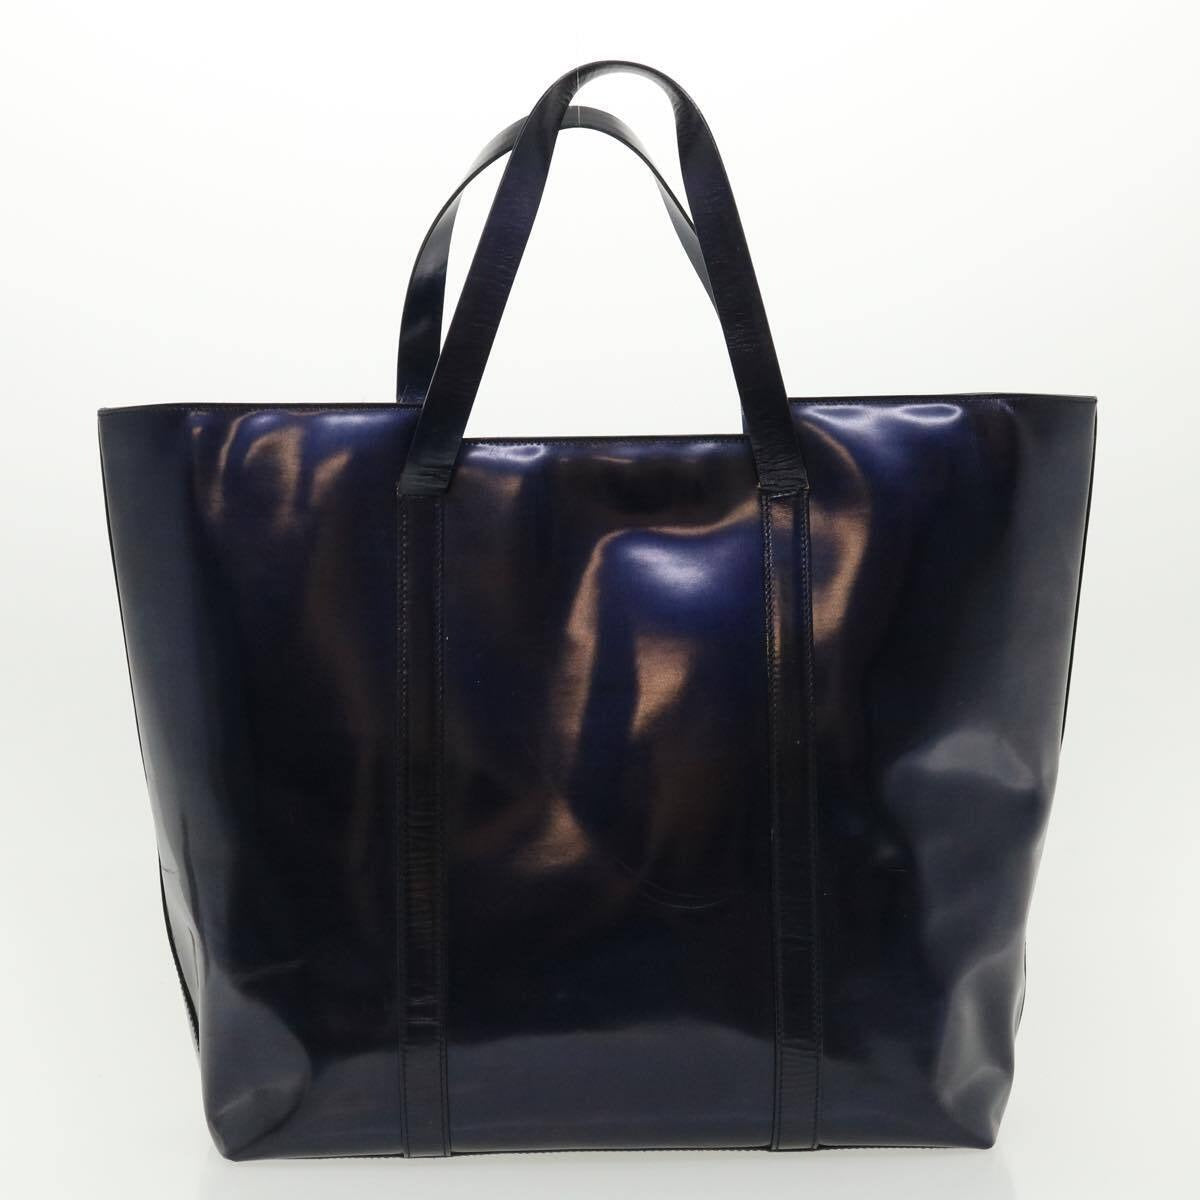 Gucci, metallic blue leather, XL tote bag/shoulder purse with  a top zip closure, graduated shape, & chrome accents